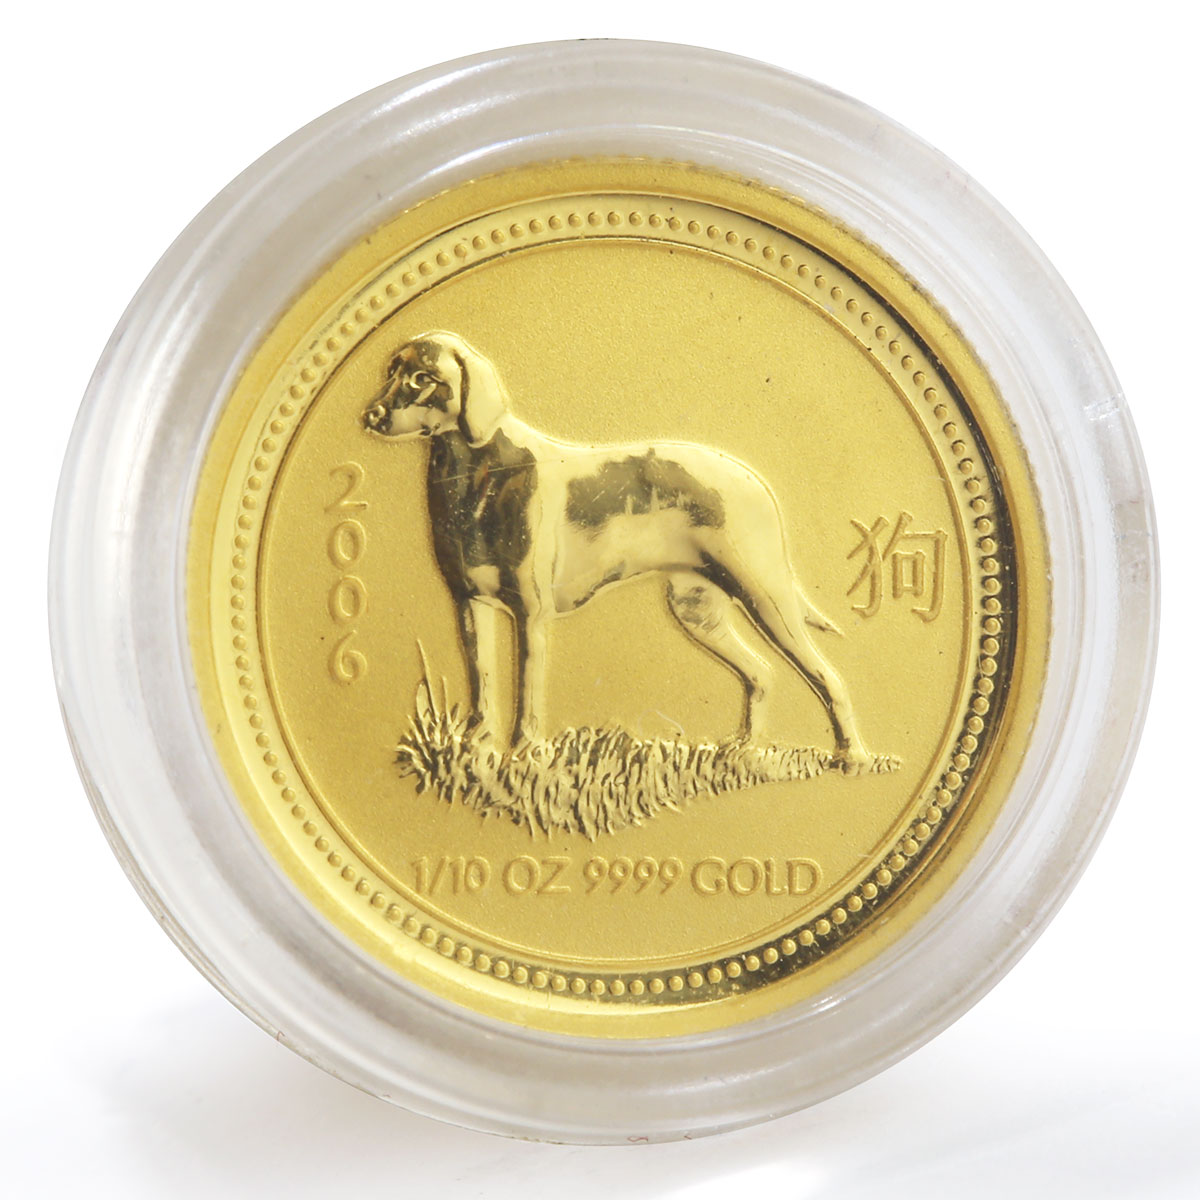 Australia 15 dollars Lunar calendar Year of Dog gold coin 1/10 oz 2006